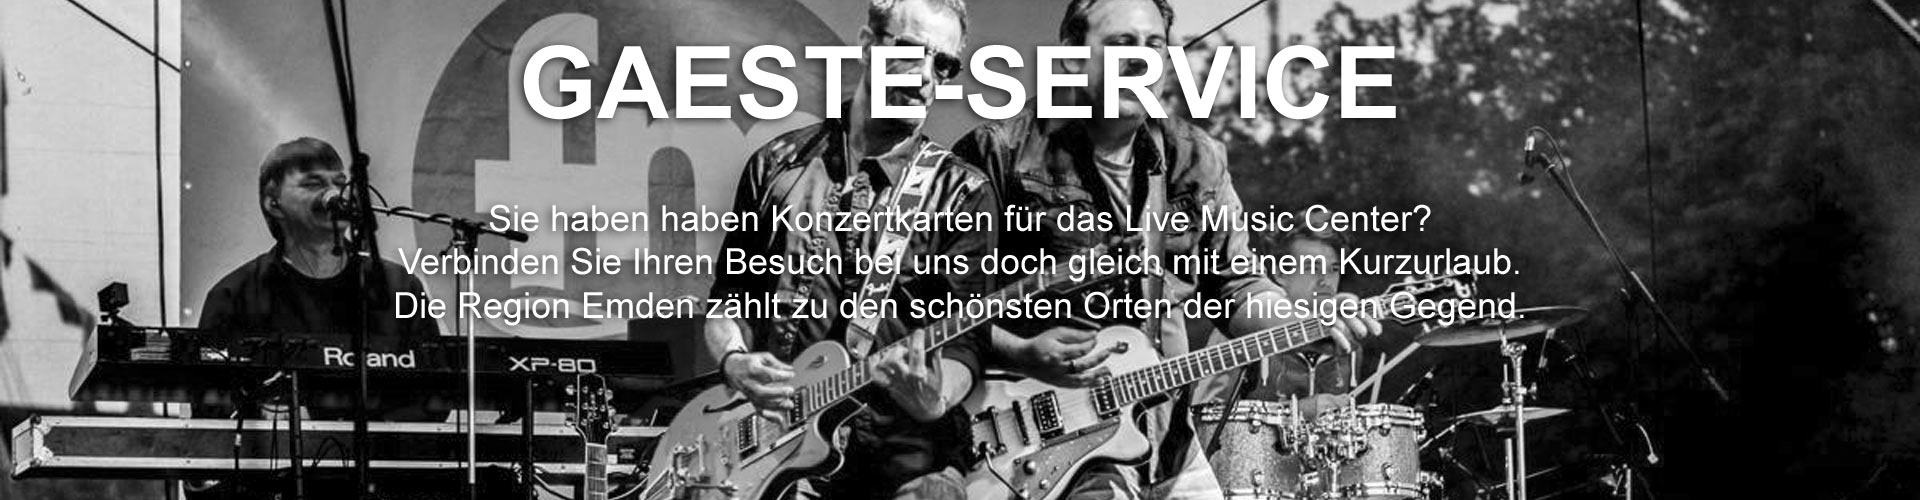 Gäste-Service - Live Music Center Emden